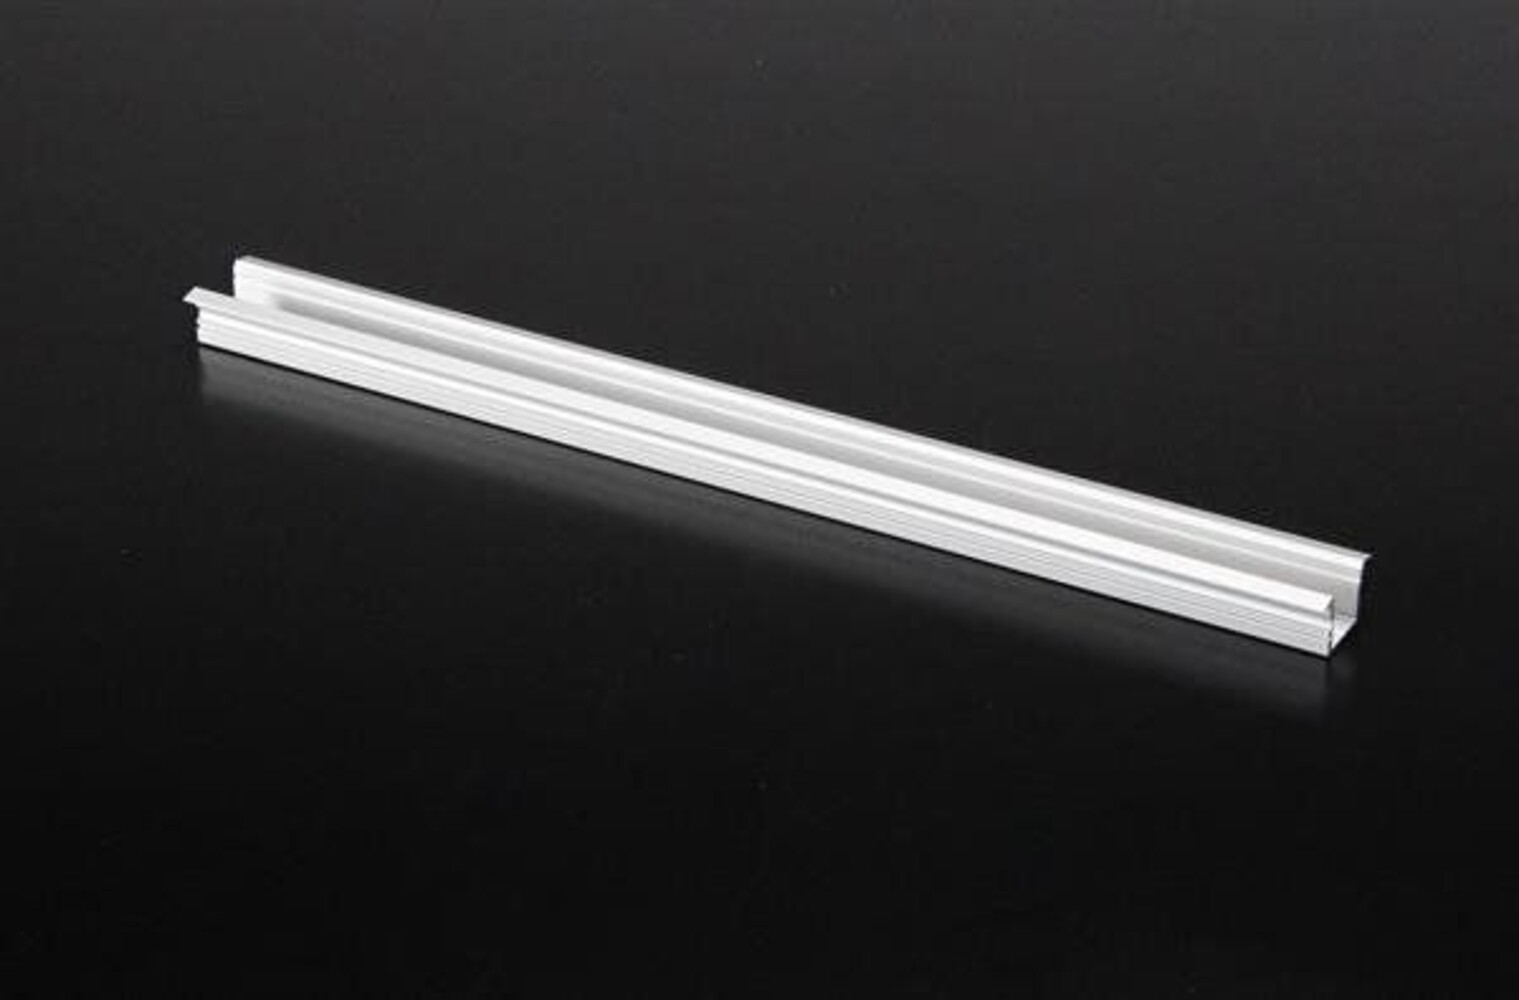 Hochqualitatives LED-Profil in Silber matt mit naturbelassener Oberfläche von Deko-Light